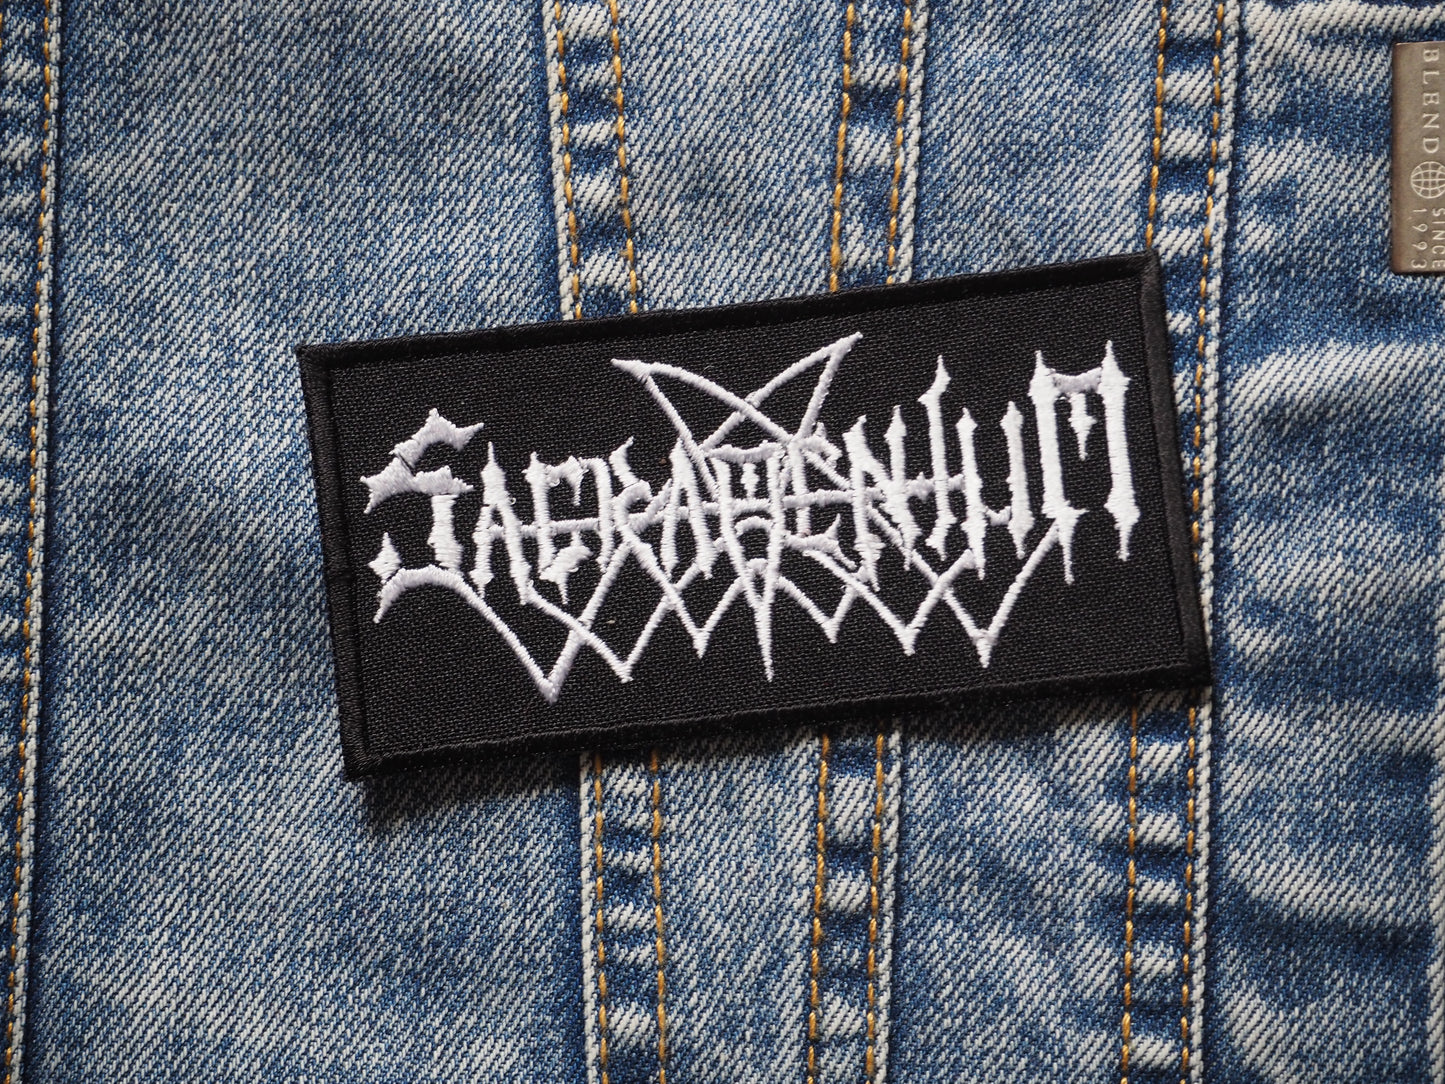 Sacramentum Black Metal Embroidered Patch